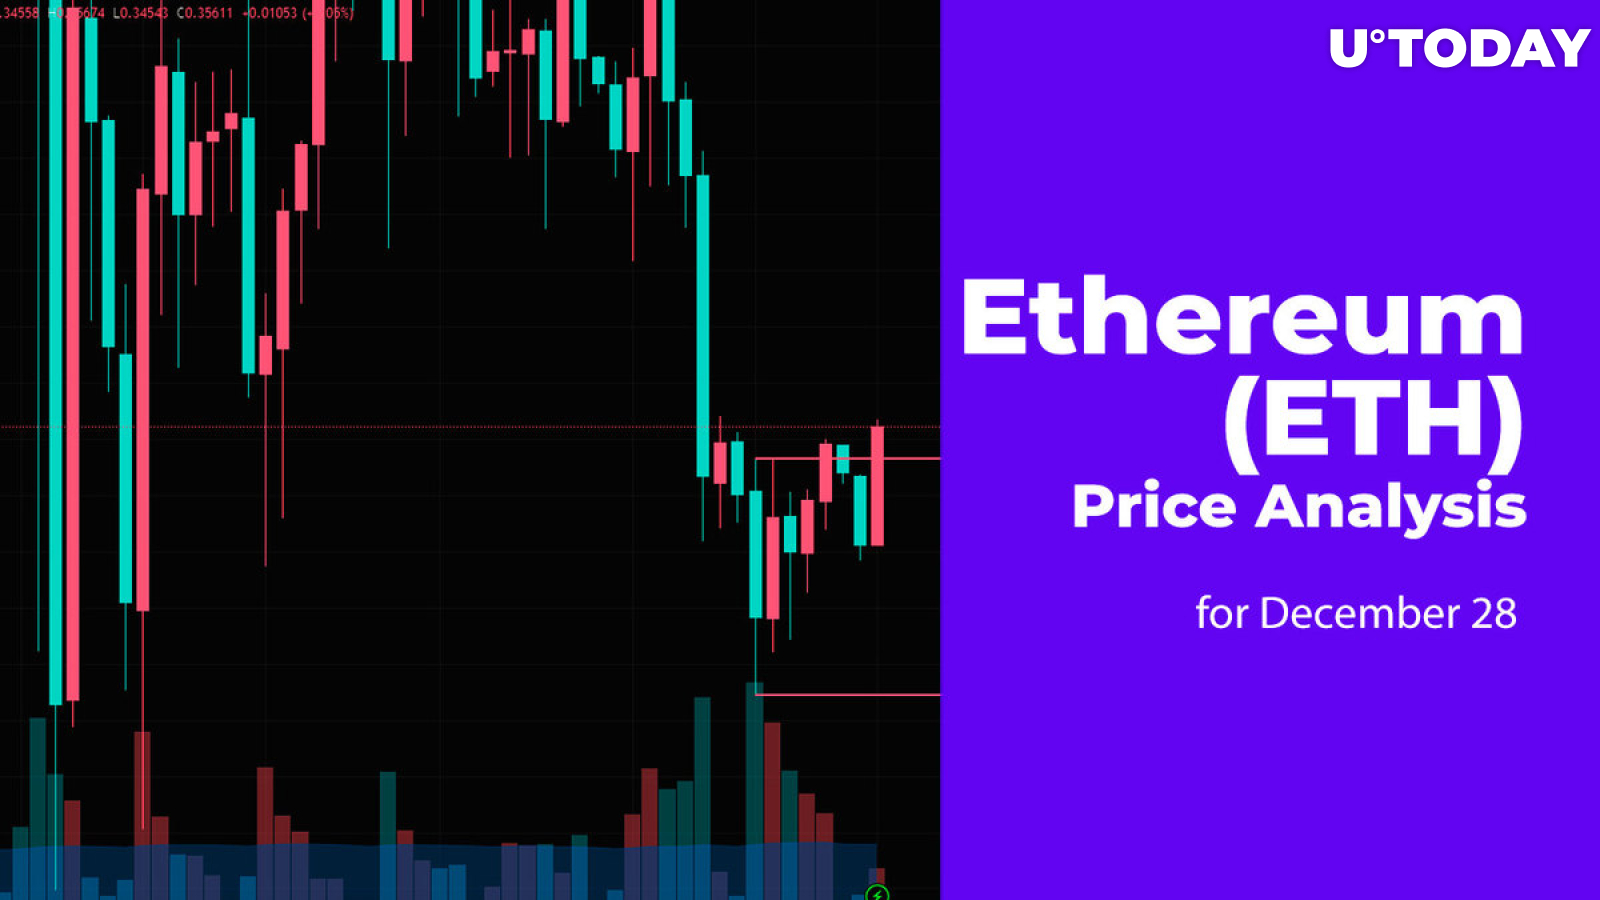 Ethereum (ETH) Price Analysis for December 28